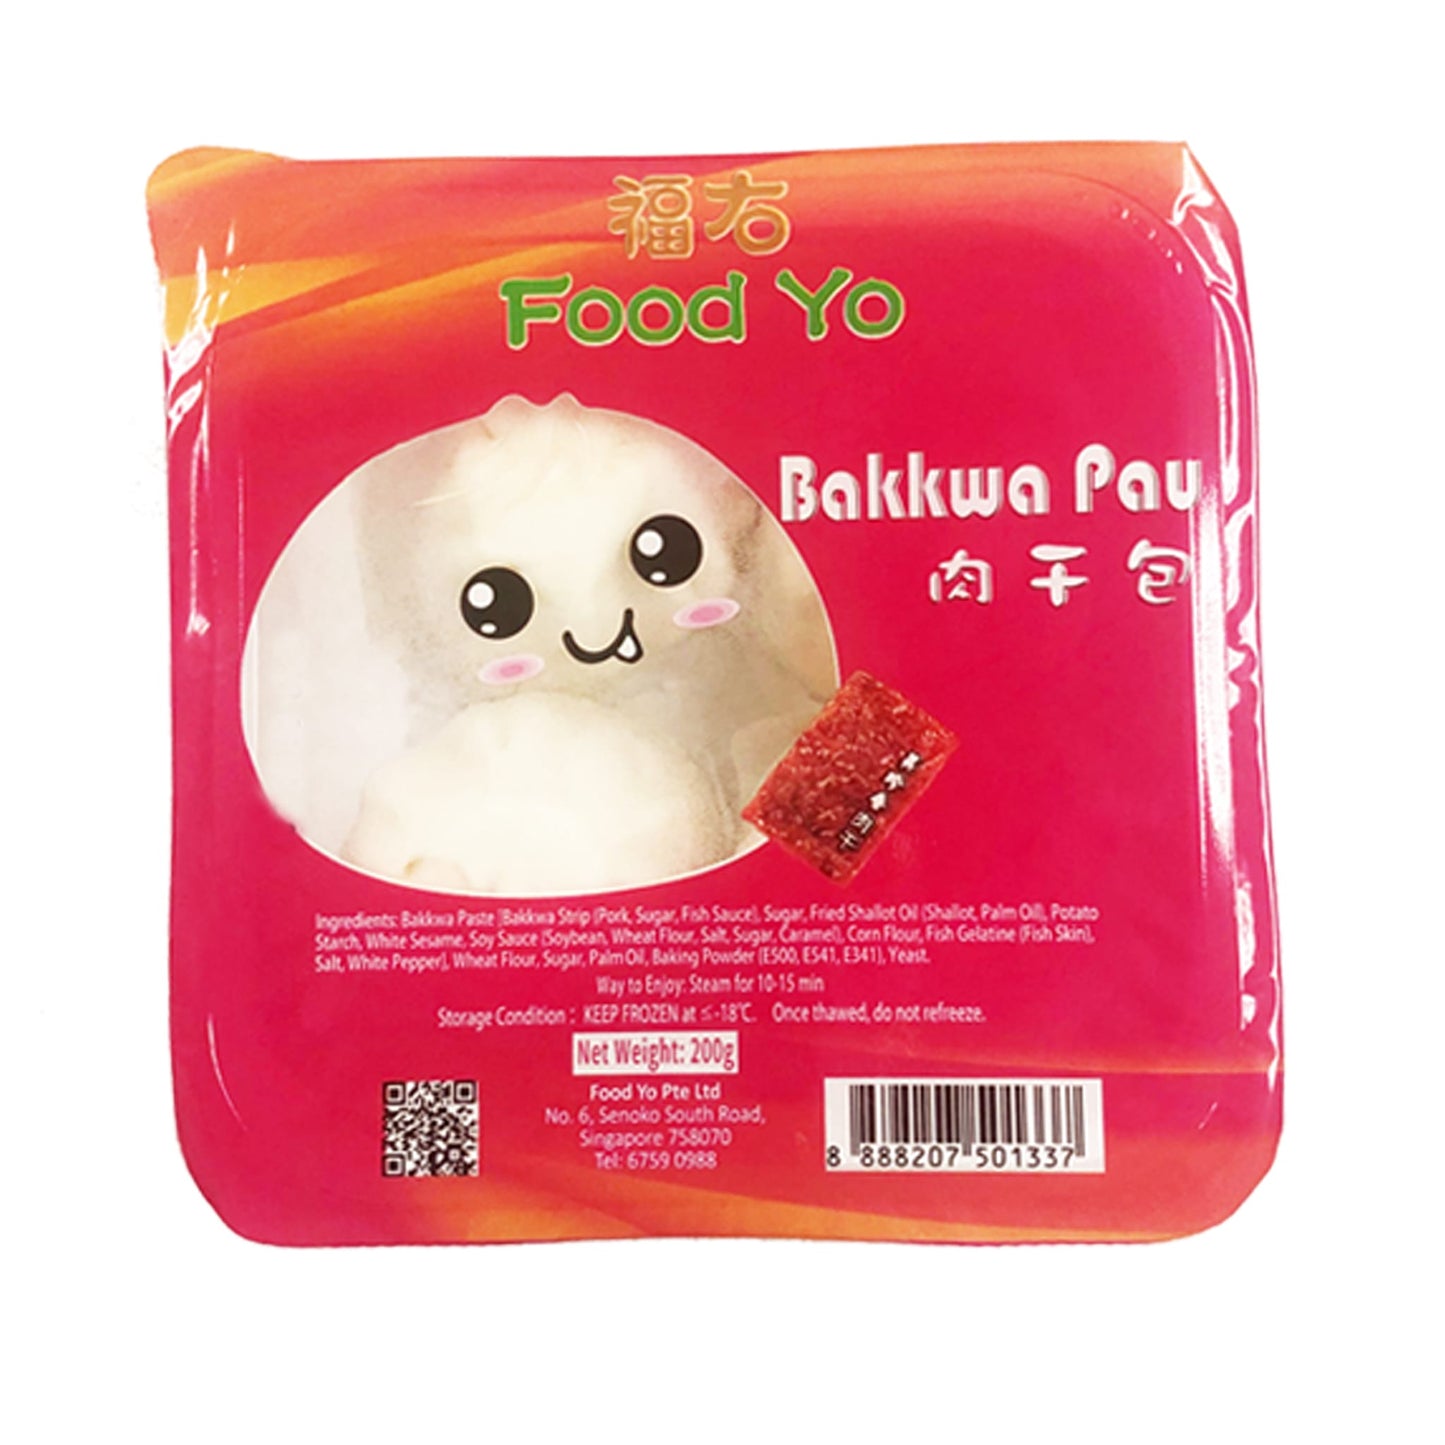 Bakkwa Pau 200g By Food Yo - Chop Hup Chong